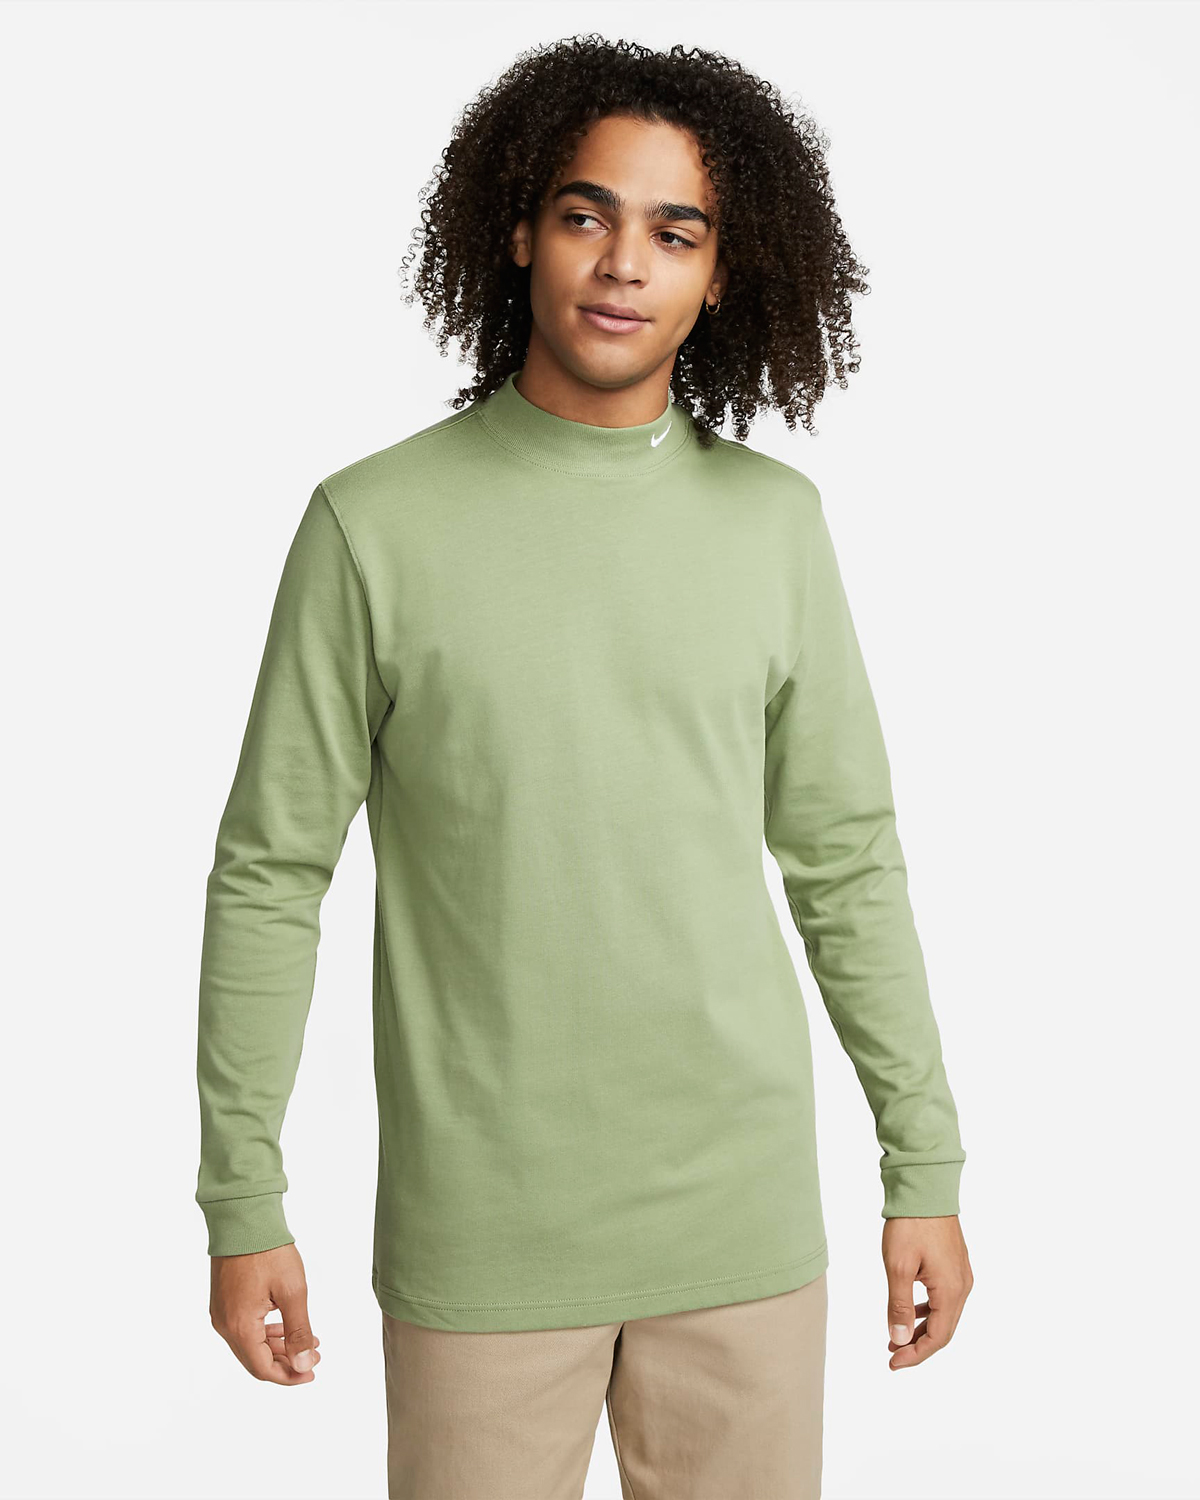 Nike-Oil-Green-Life-Long-Sleeve-Mock-Neck-Shirt